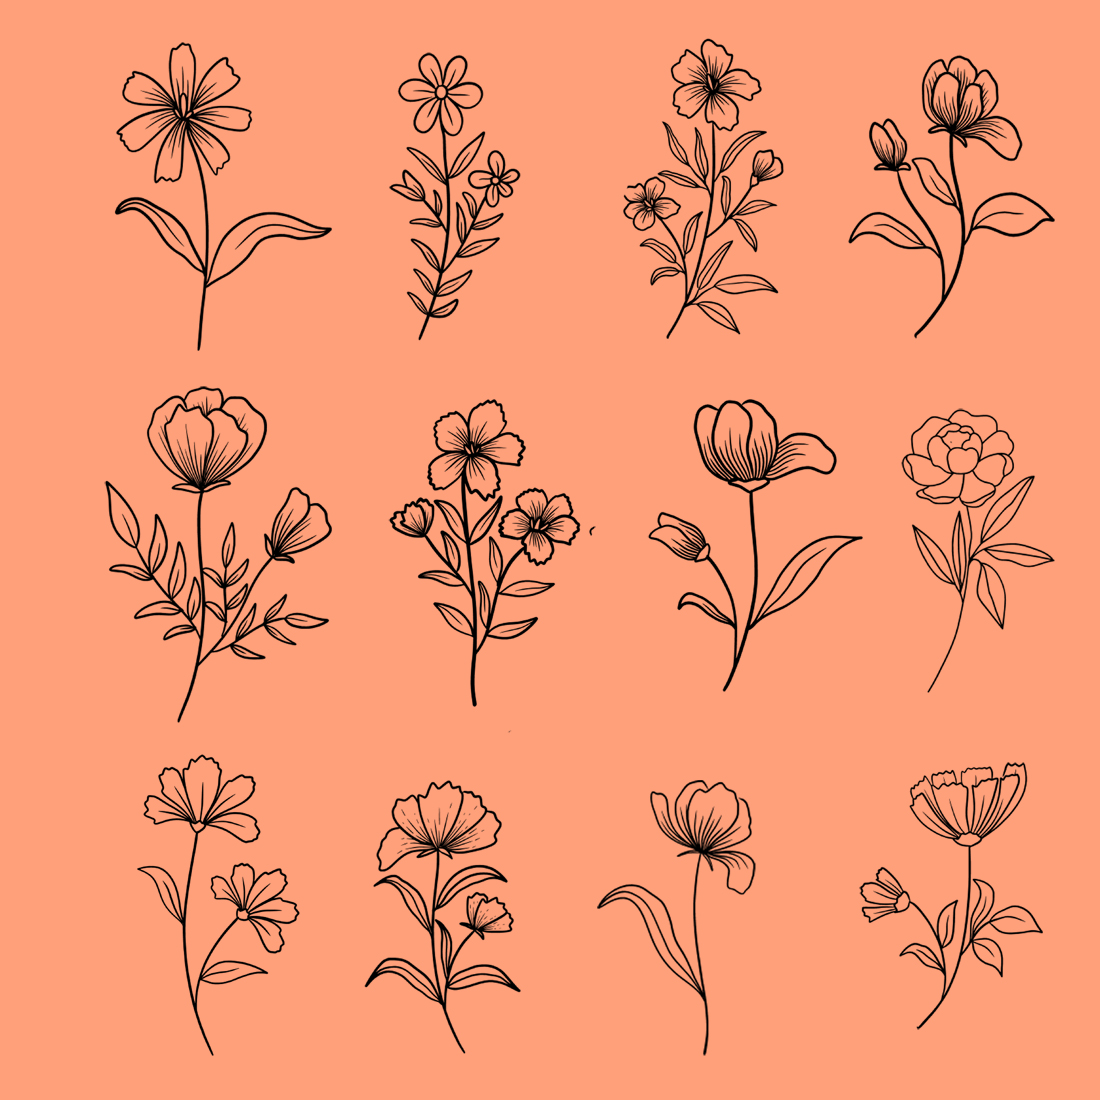 Image of flowers on an orange background.